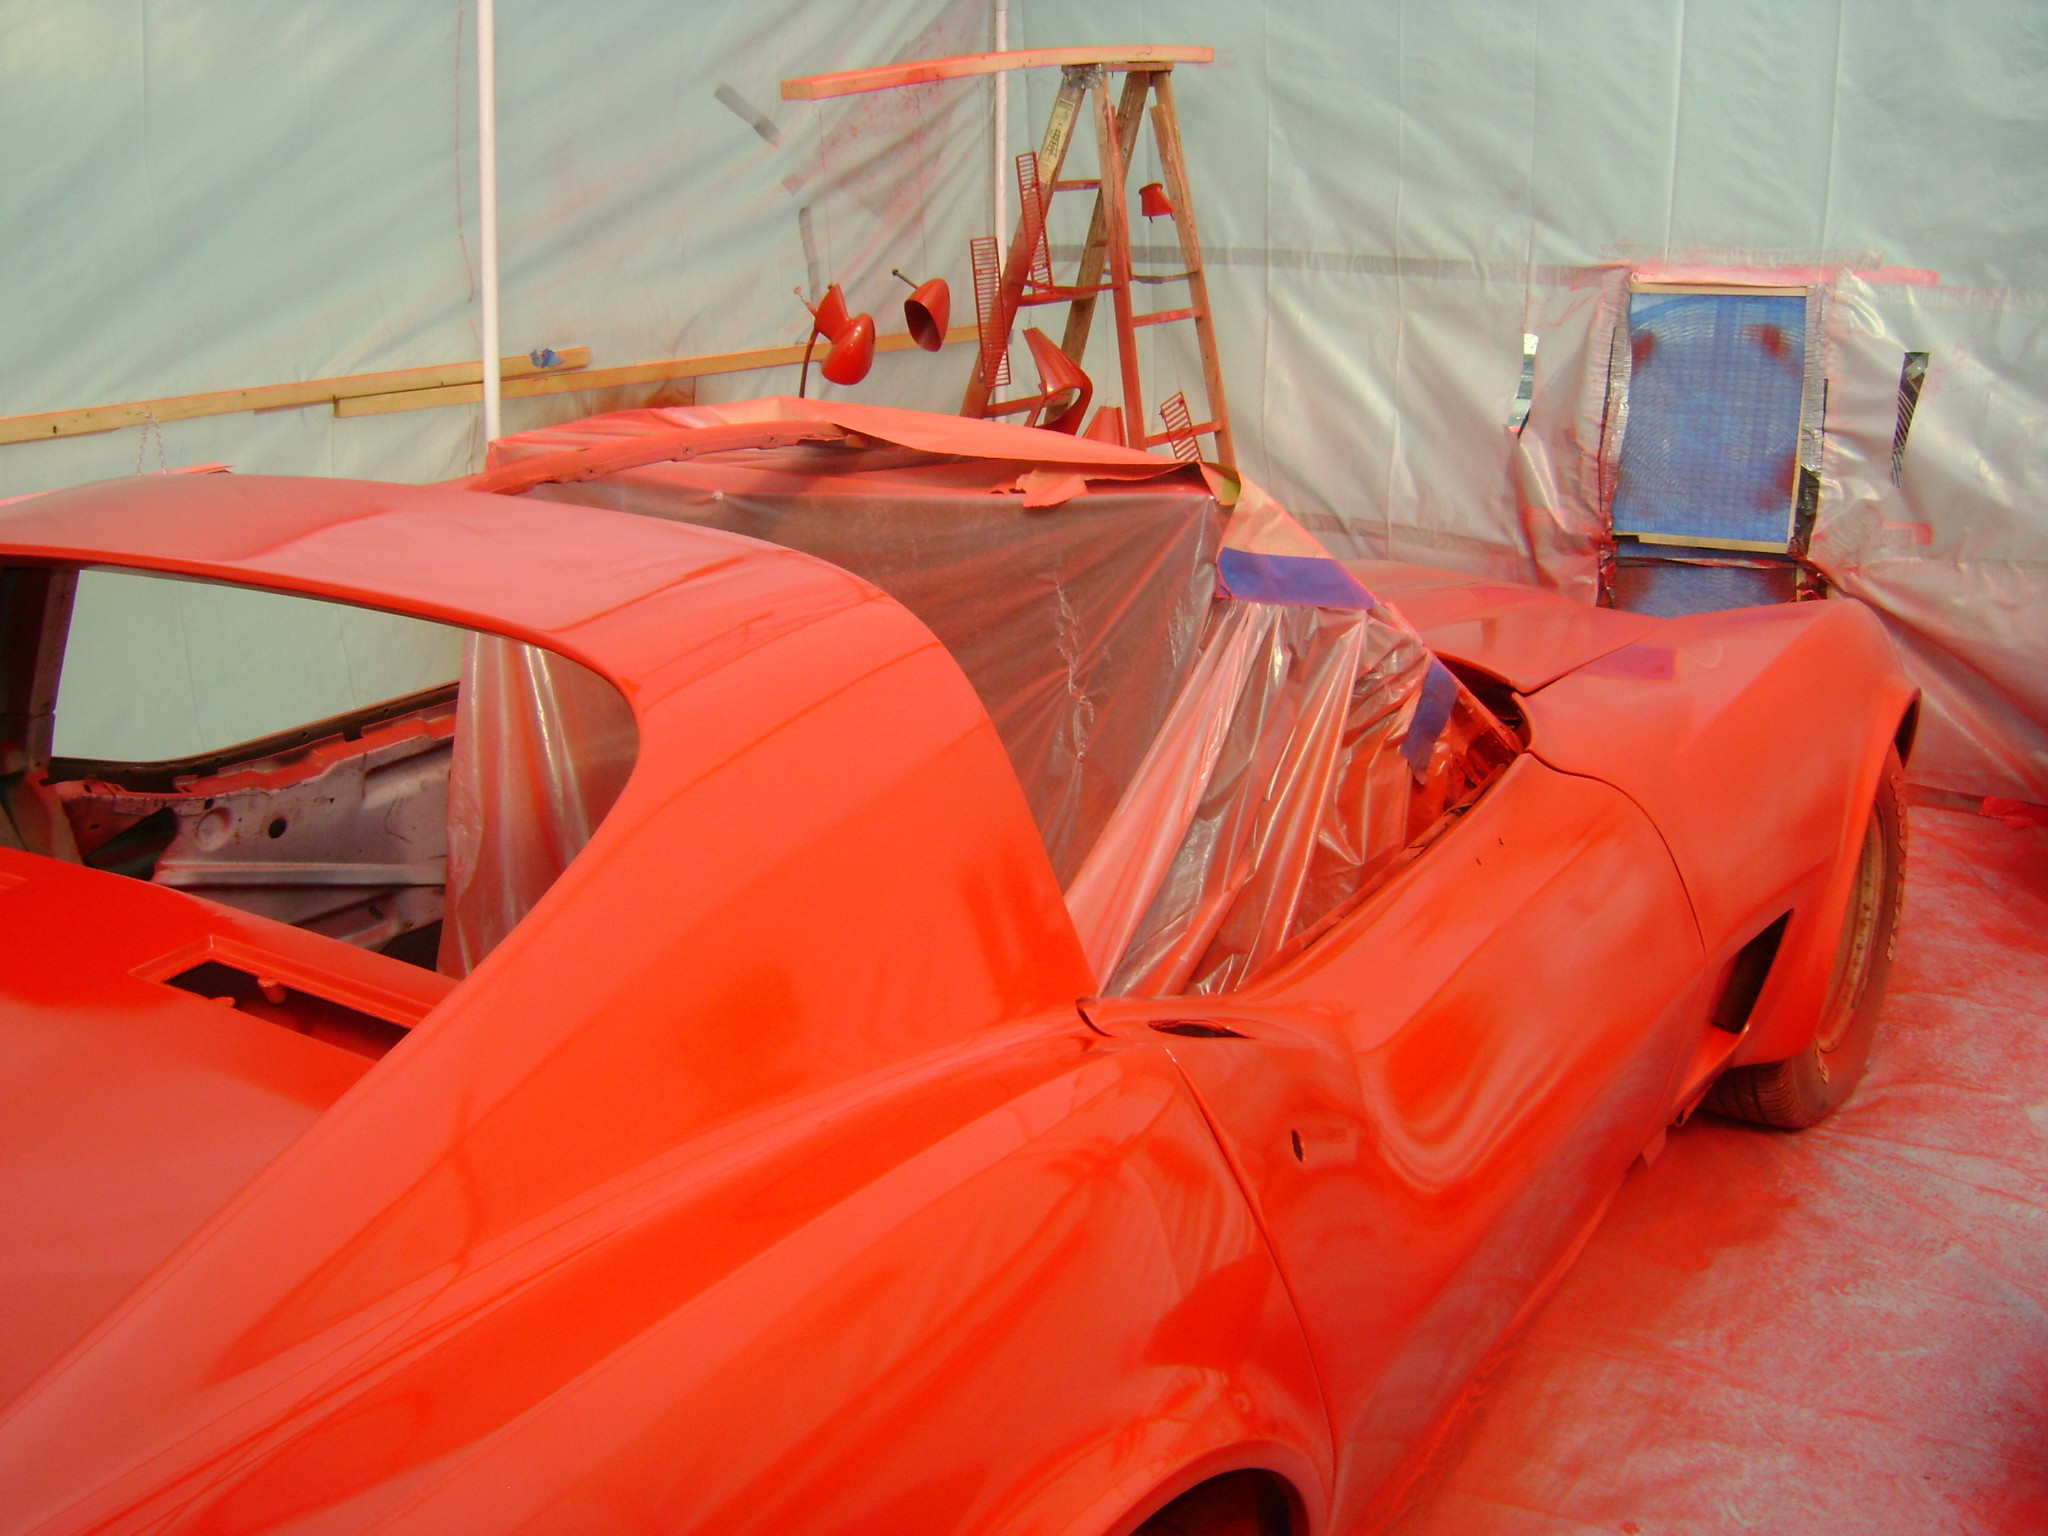 Best ideas about DIY Car Painting
. Save or Pin My DIY paint booth CorvetteForum Chevrolet Corvette Now.